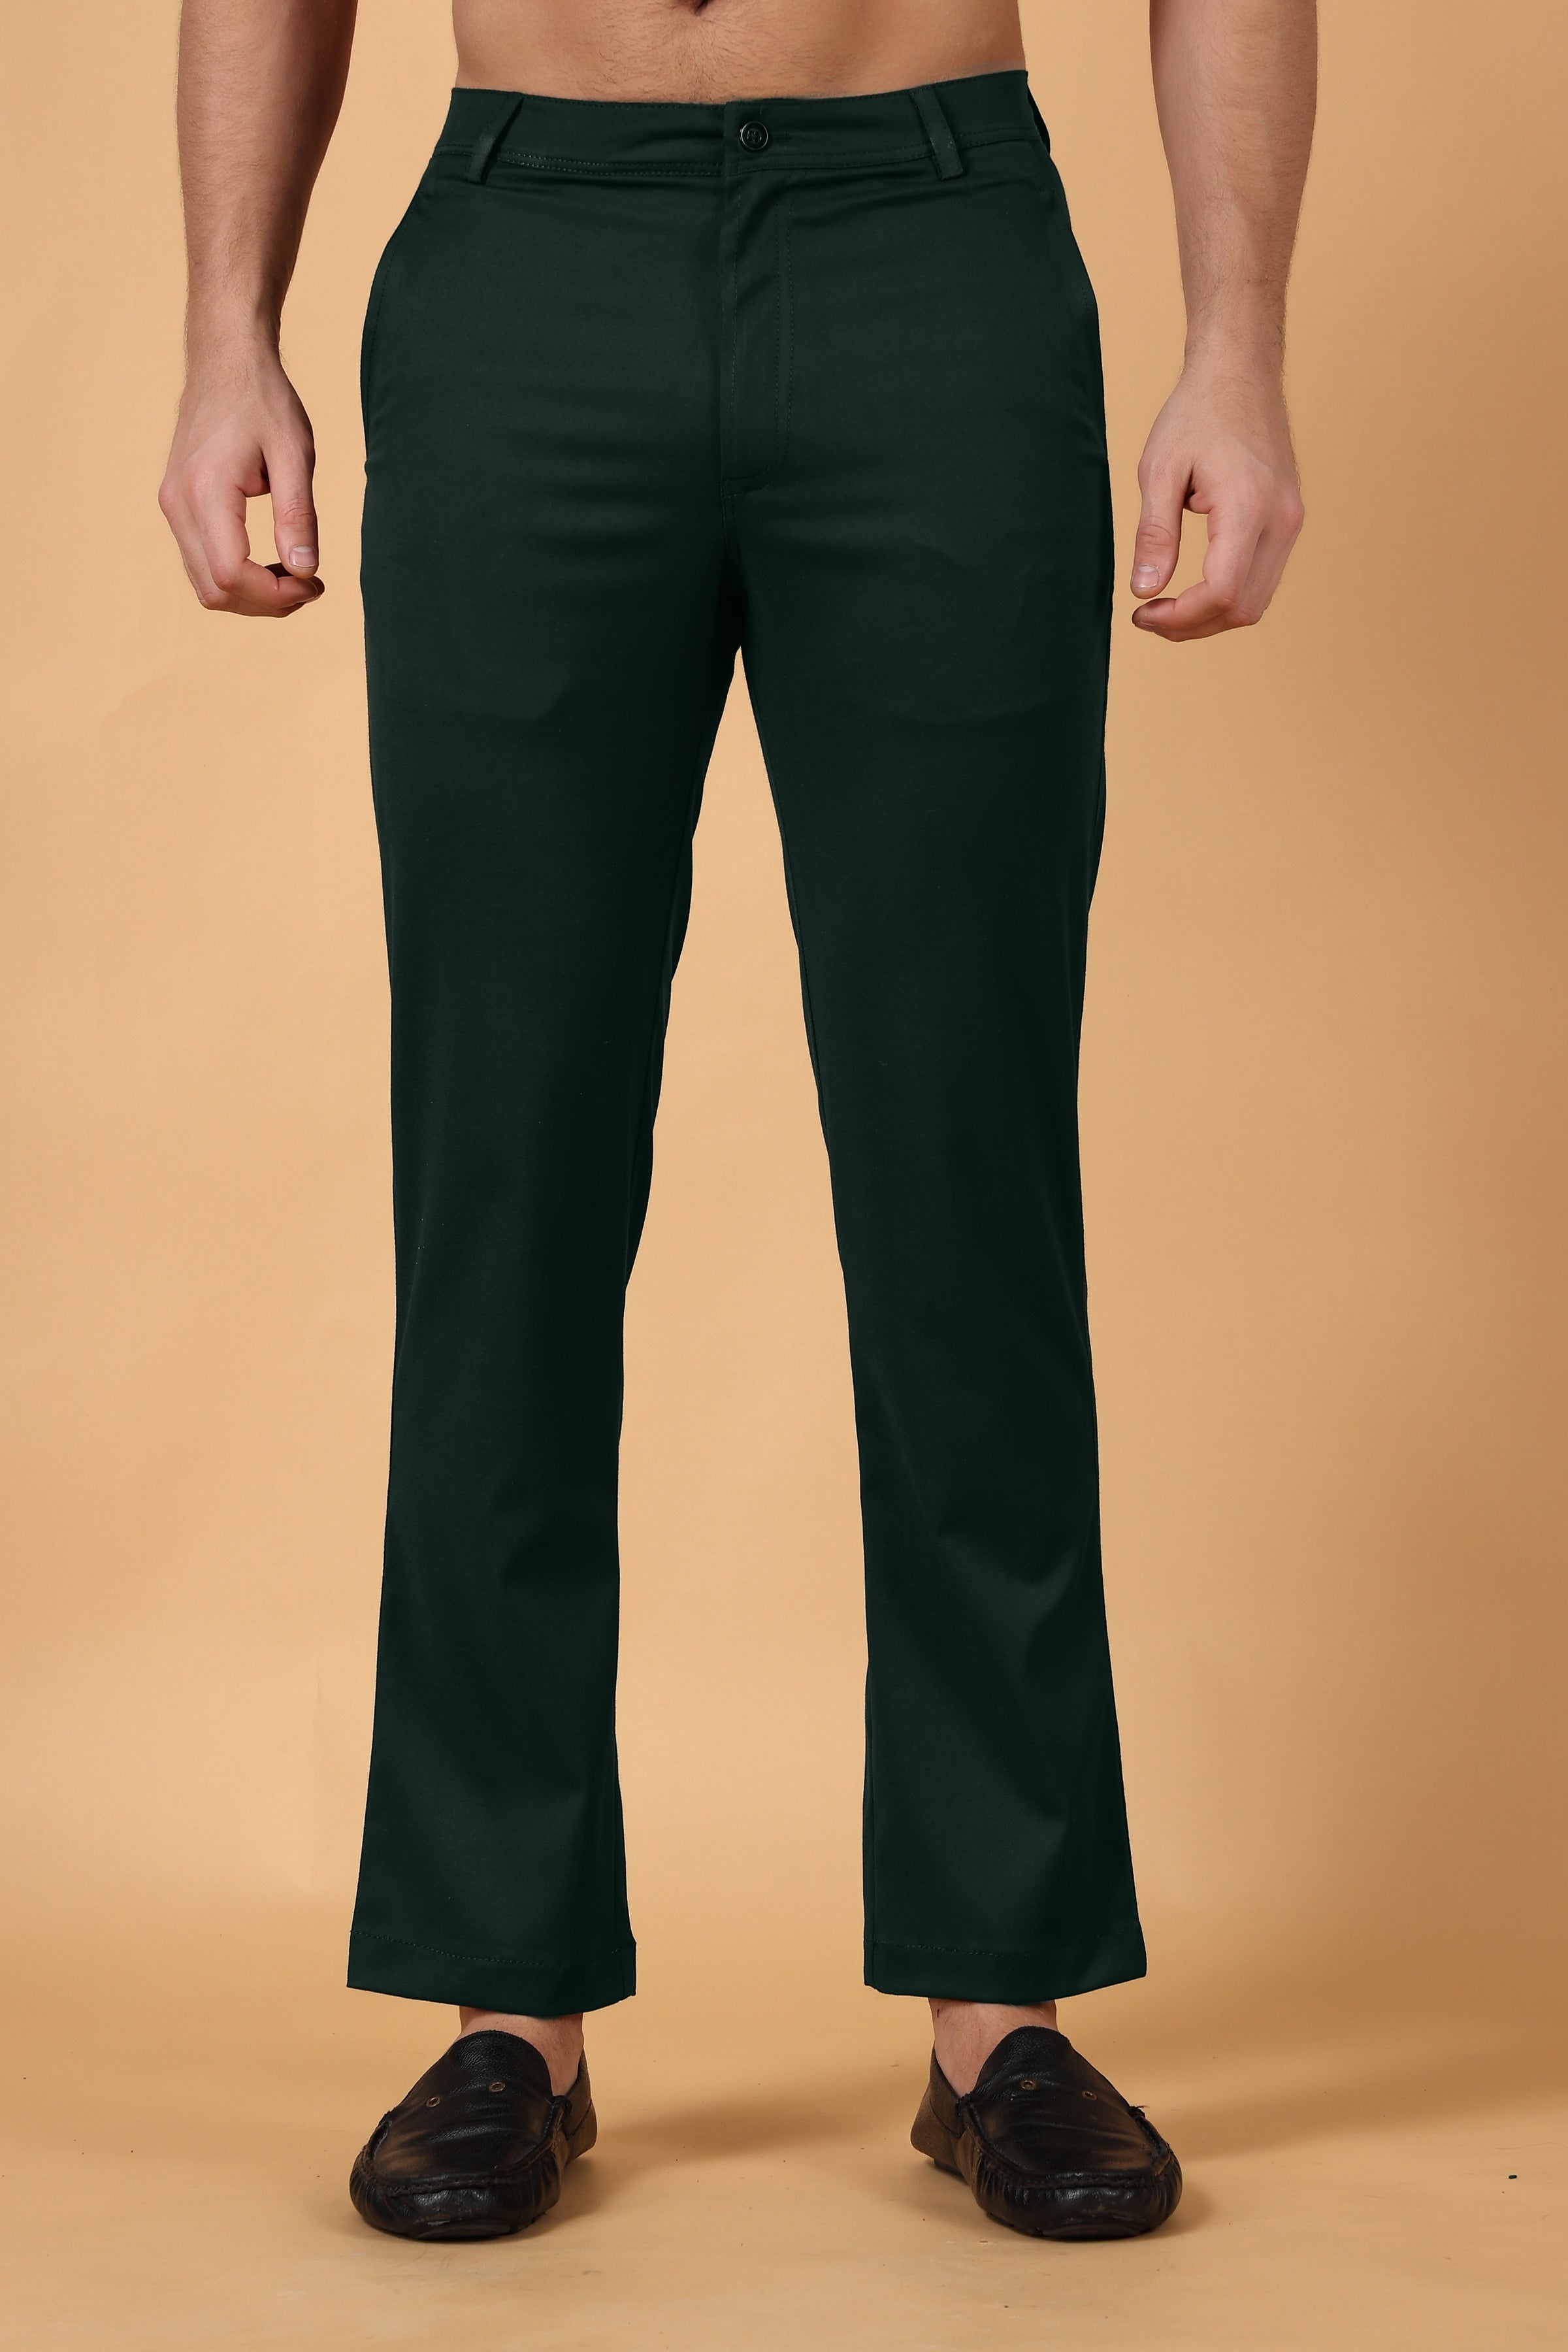 Buy HANGUP Mens Formal Wear Trouser Green Online